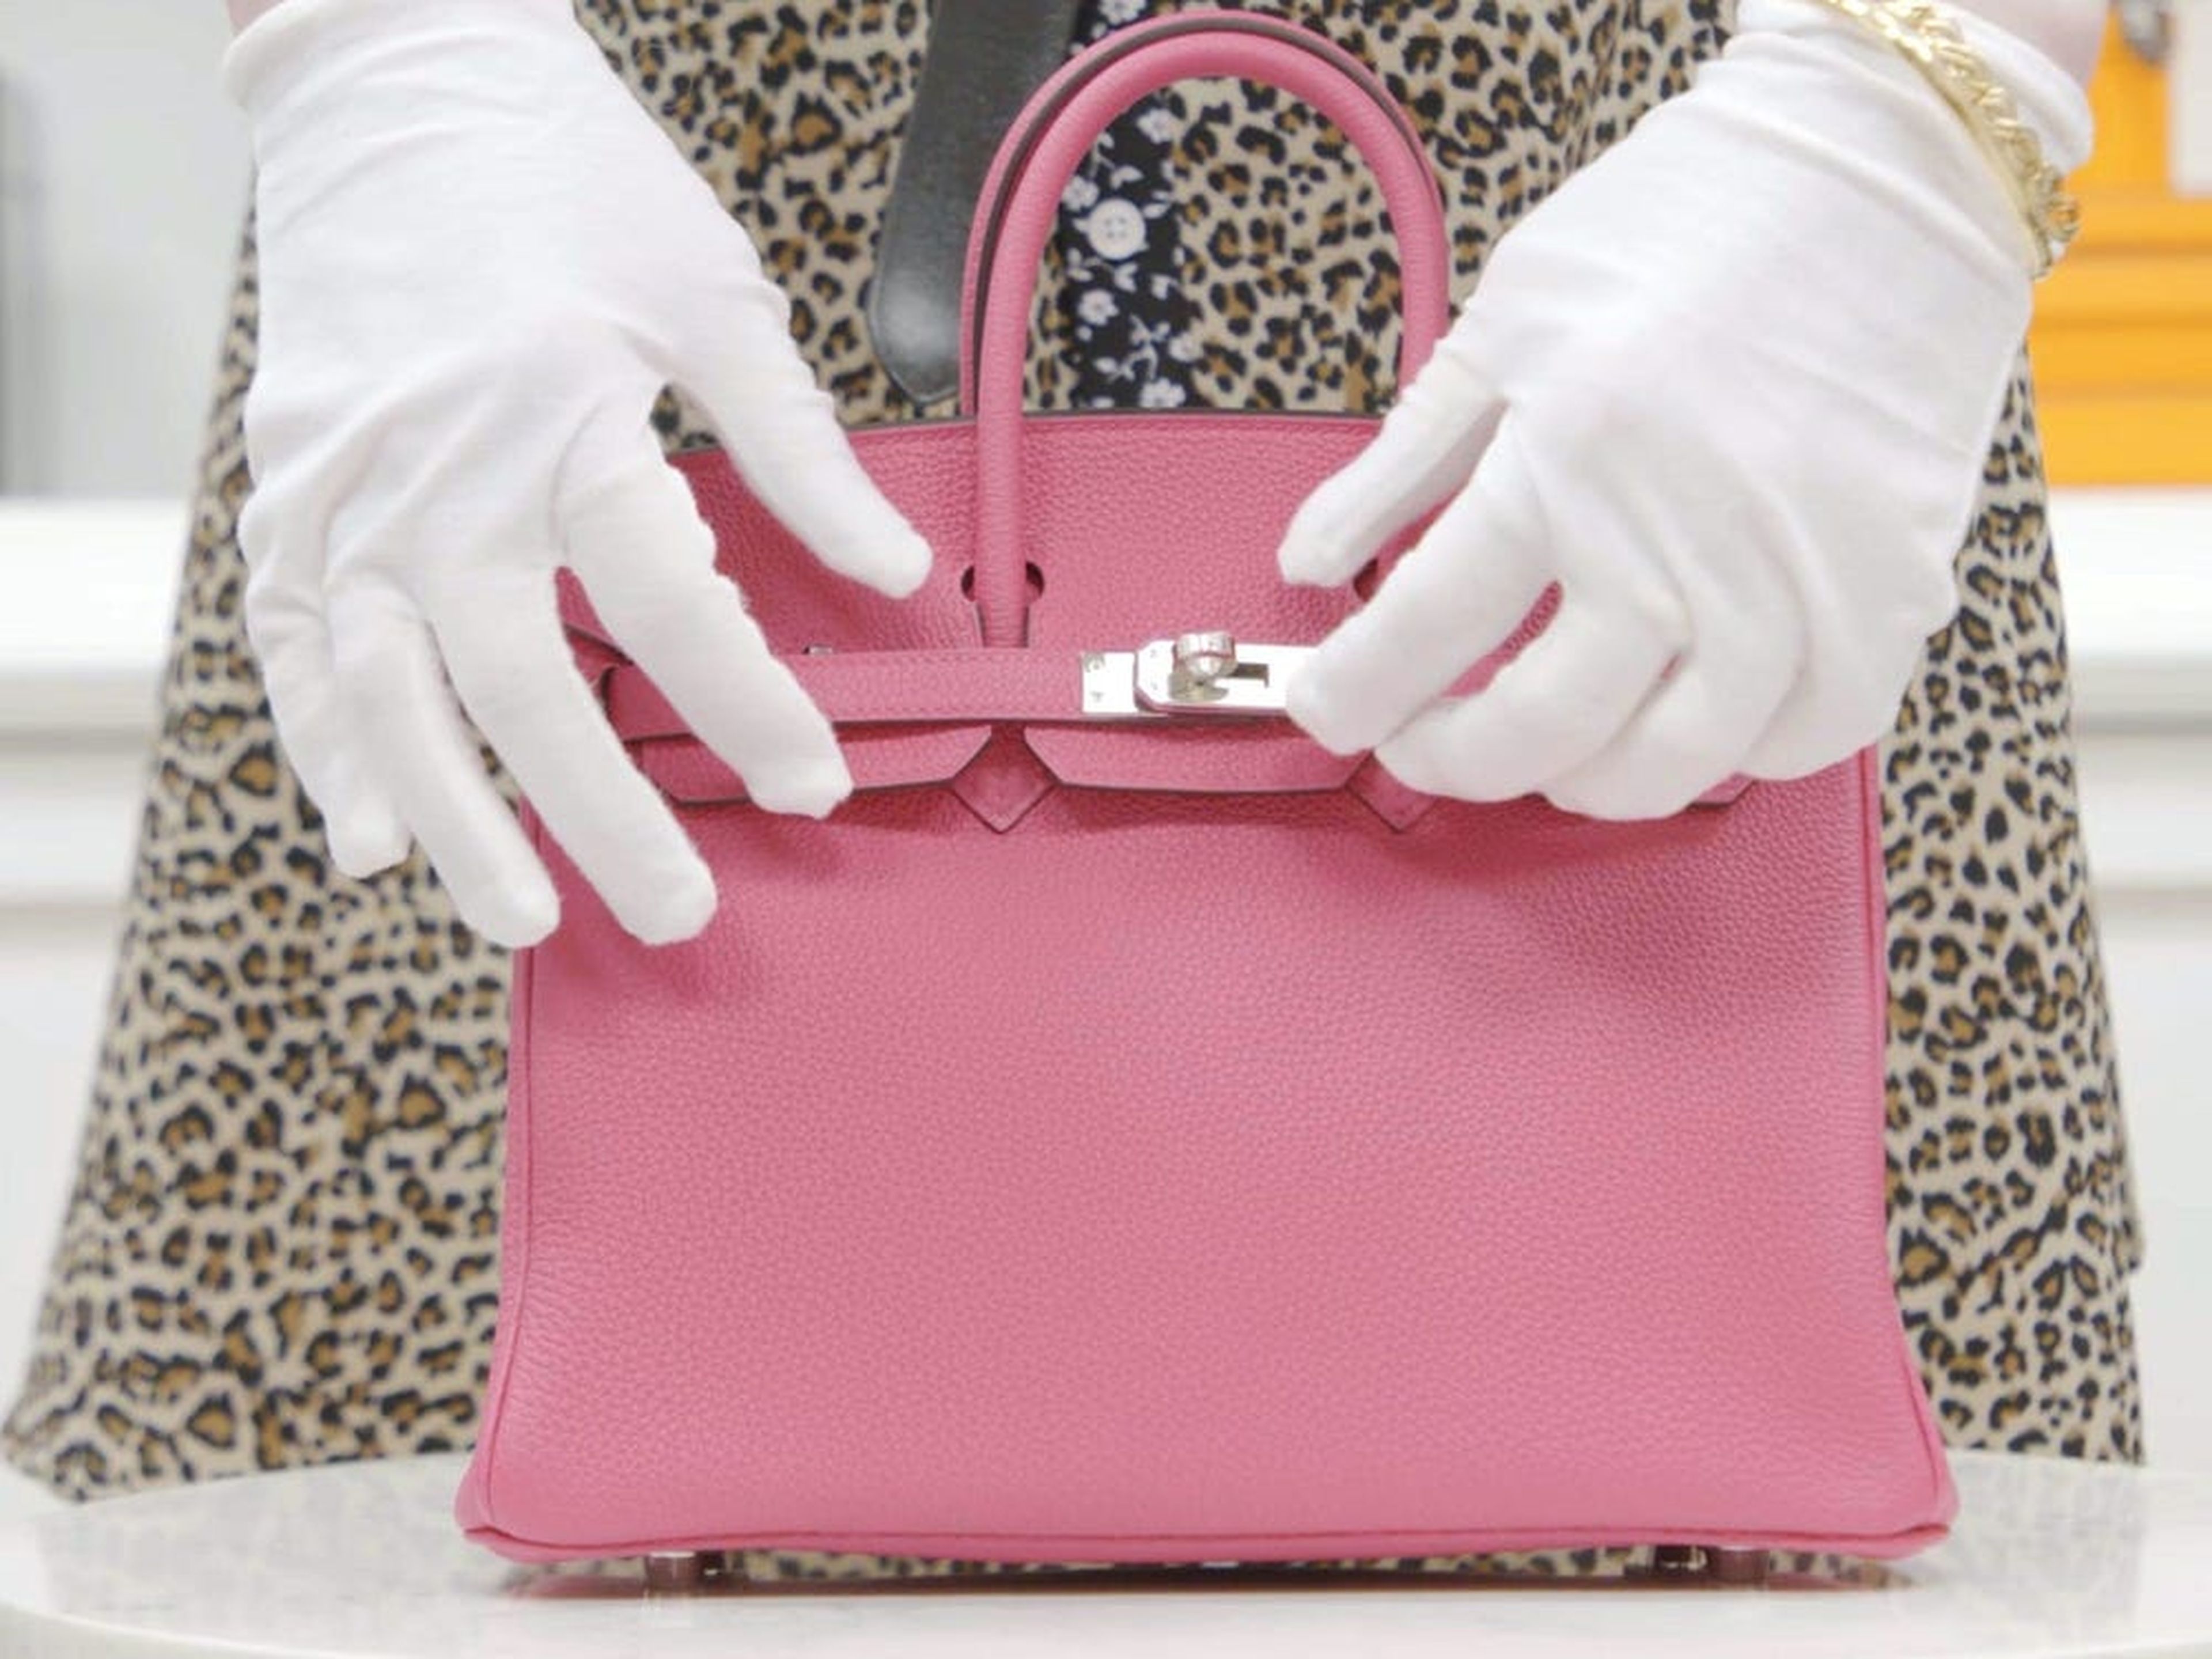 A Pink Birkin Bag From Hermès.